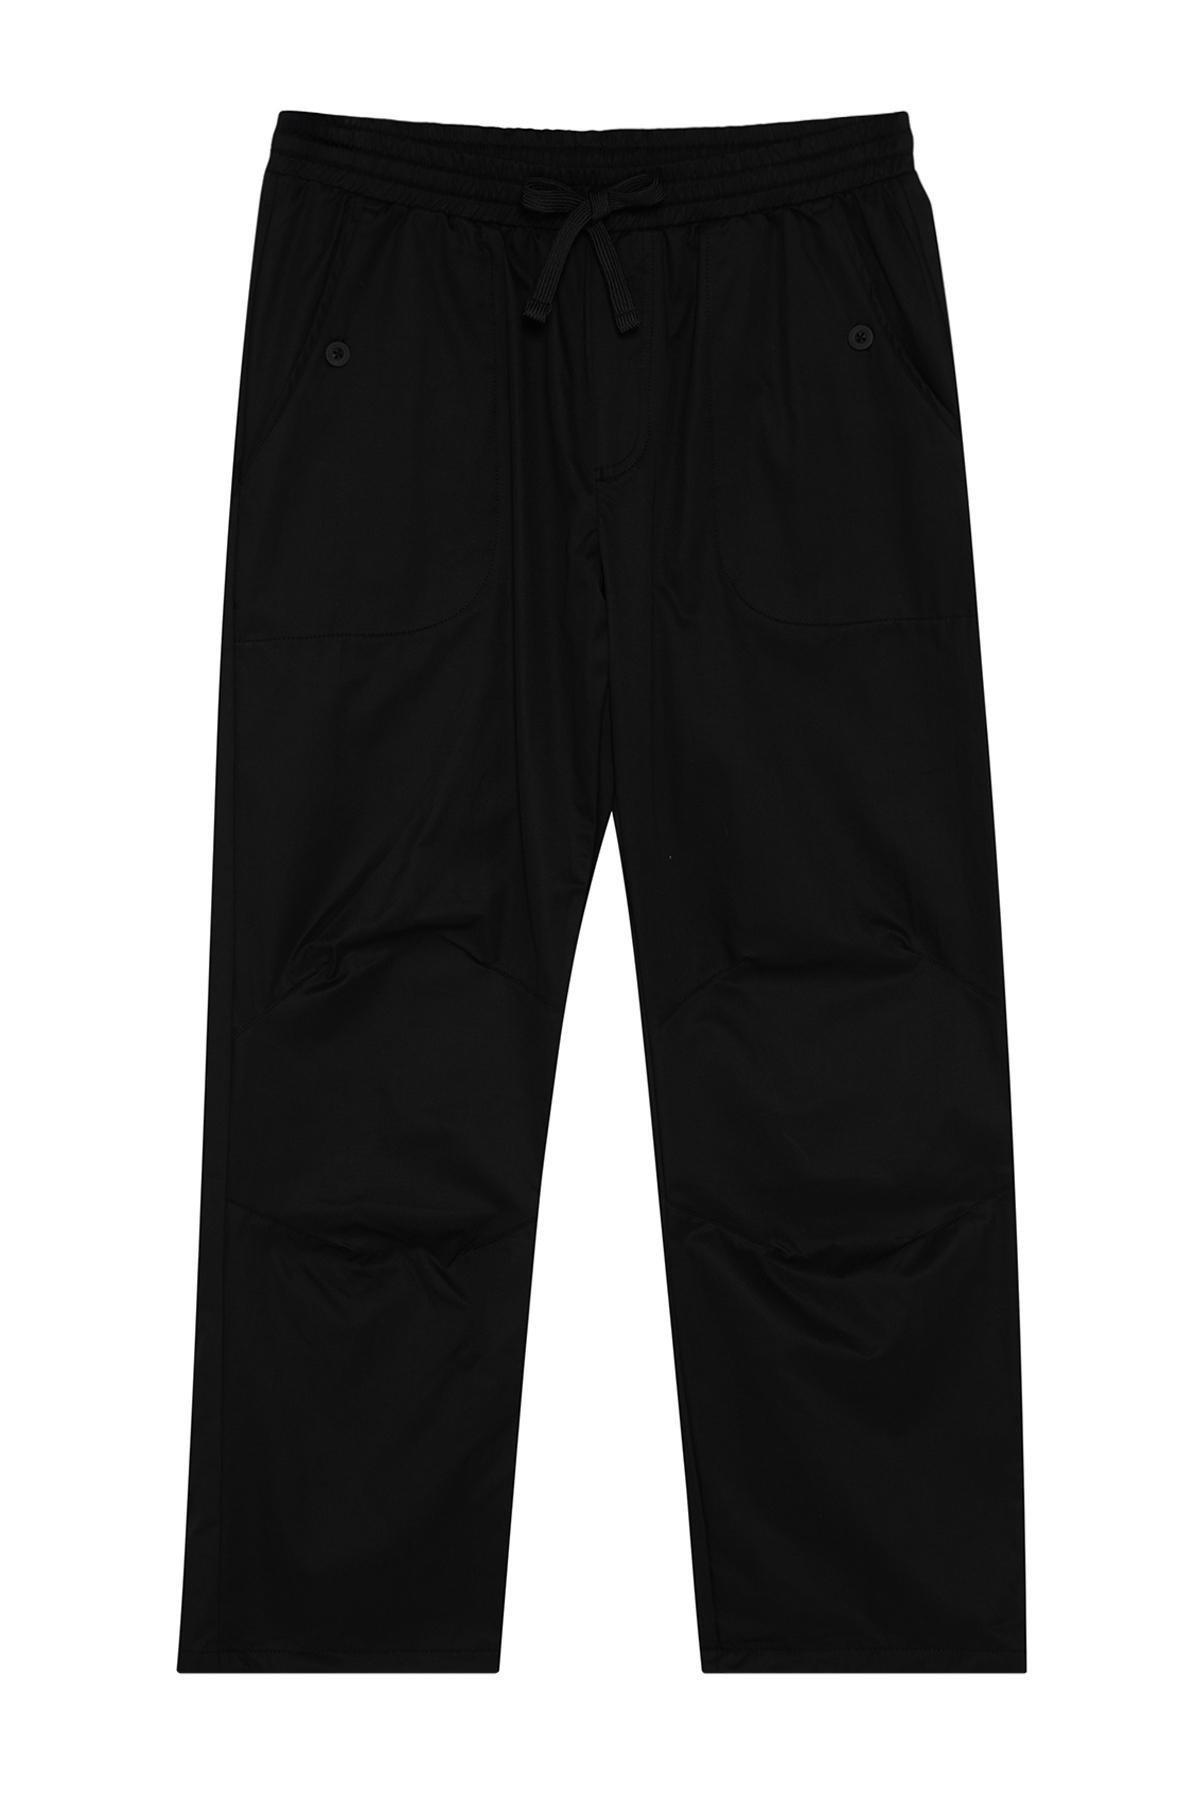 Trendyol - Black Lace-Up Detail Regular Fit Pants